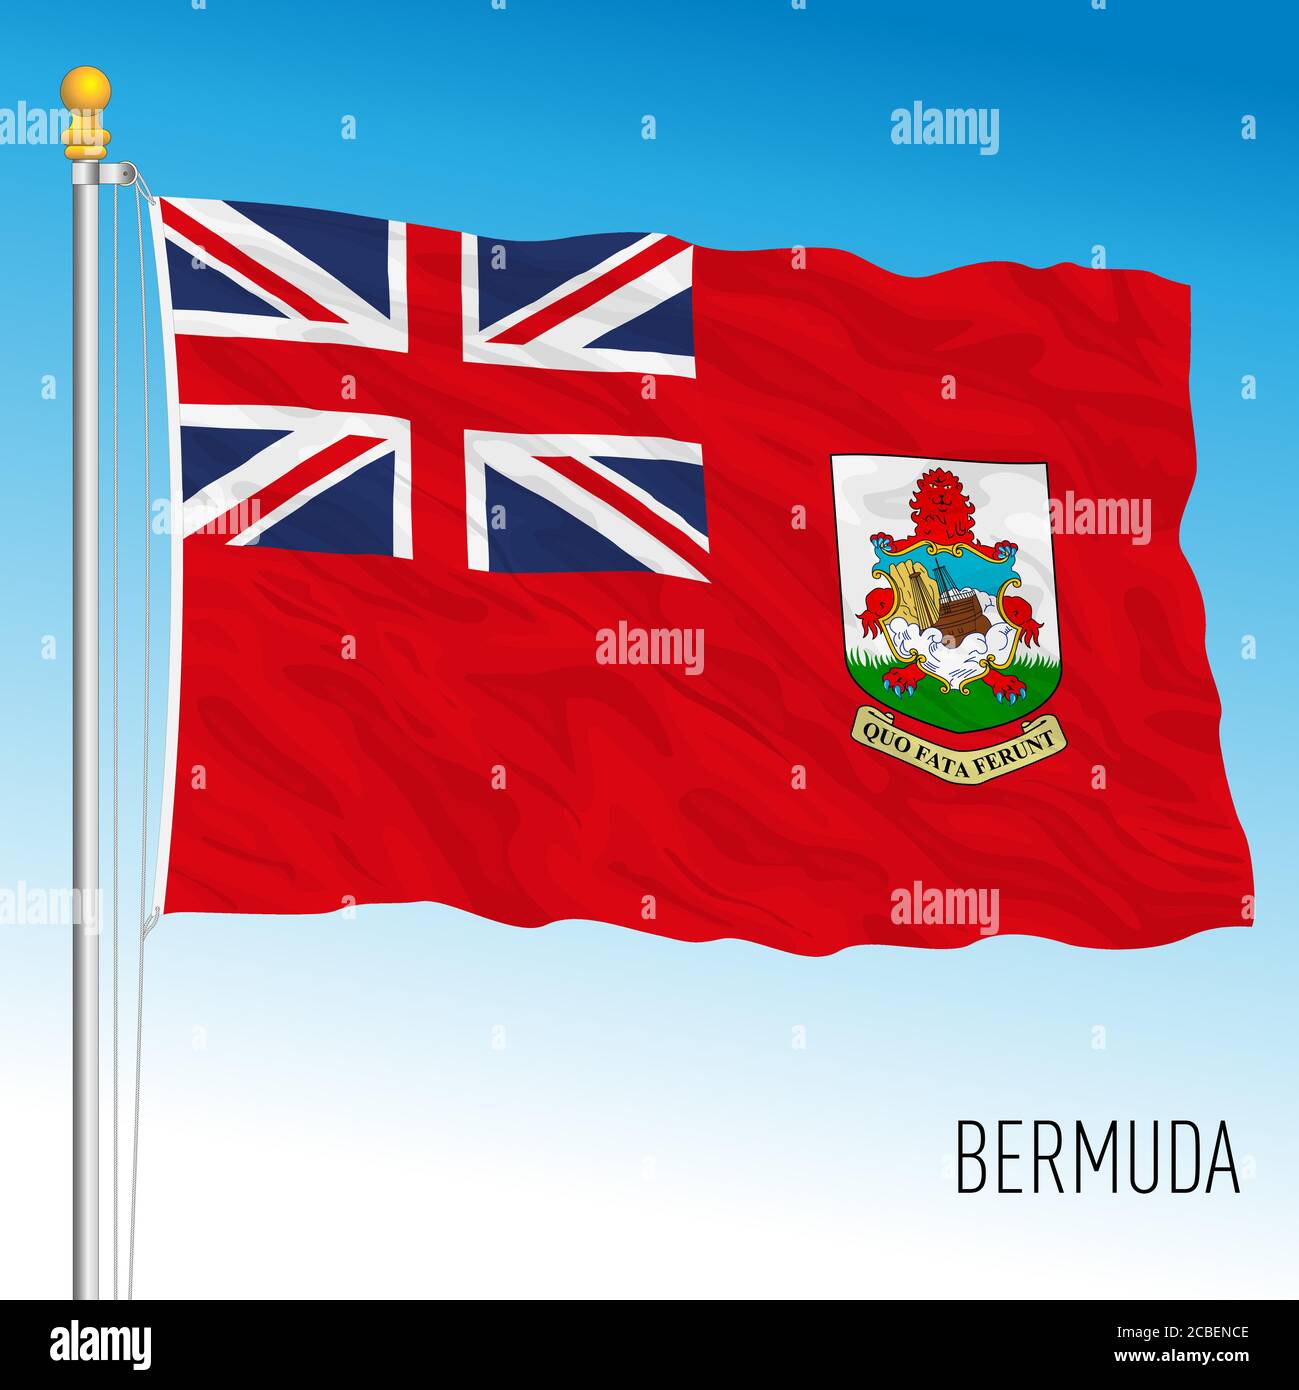 Bermuda-Inseln offizielle Nationalflagge, mittelamerika, Vektorgrafik Stock Vektor